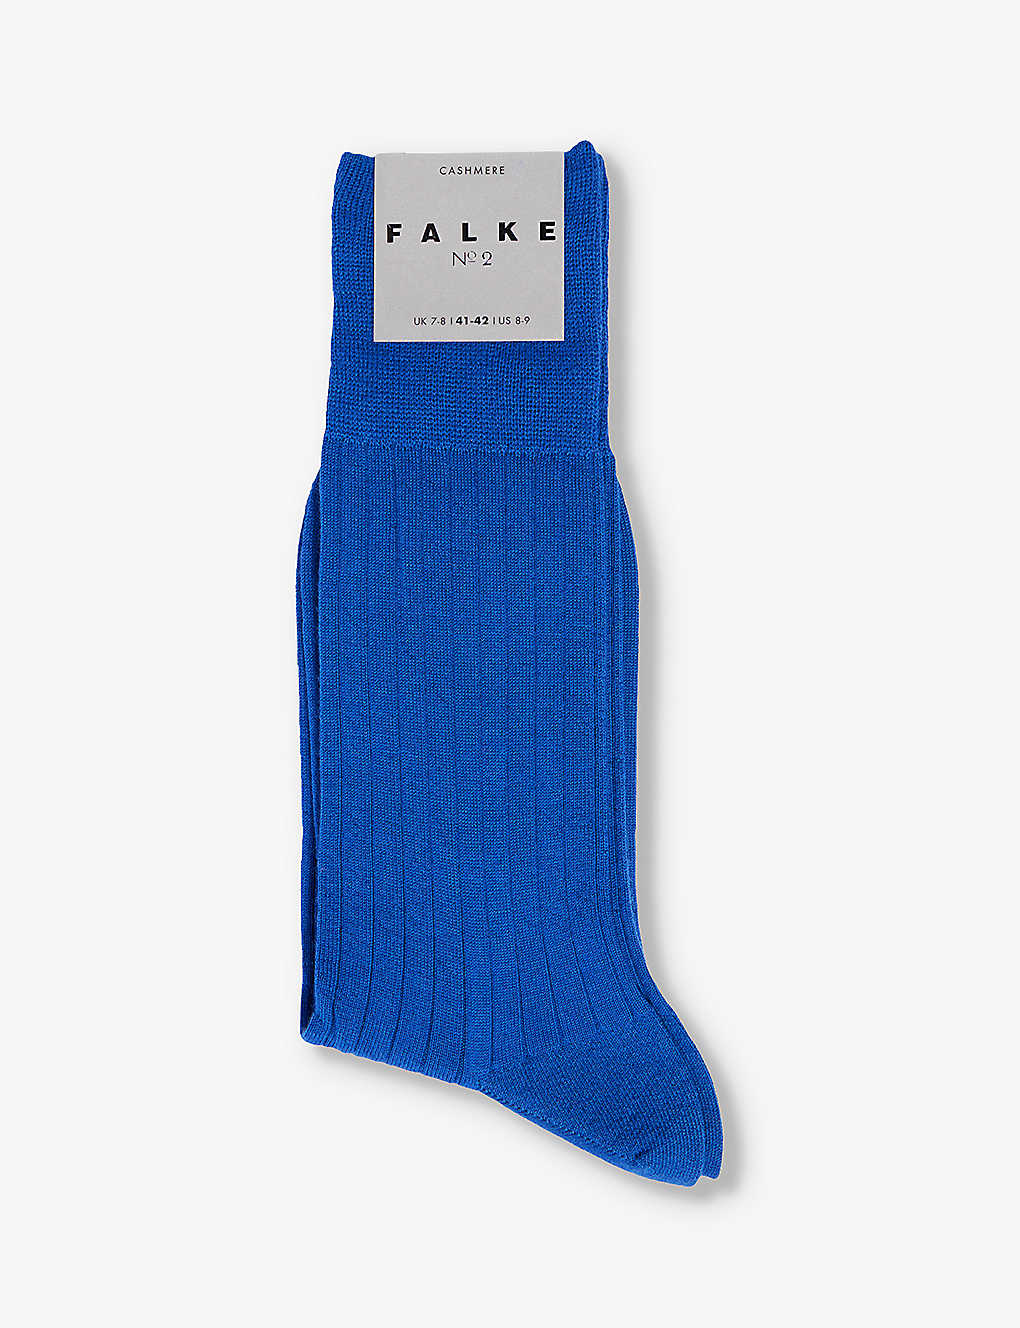 Falke Mens Olympic No. 2 Ribbed Cashmere-blend Socks